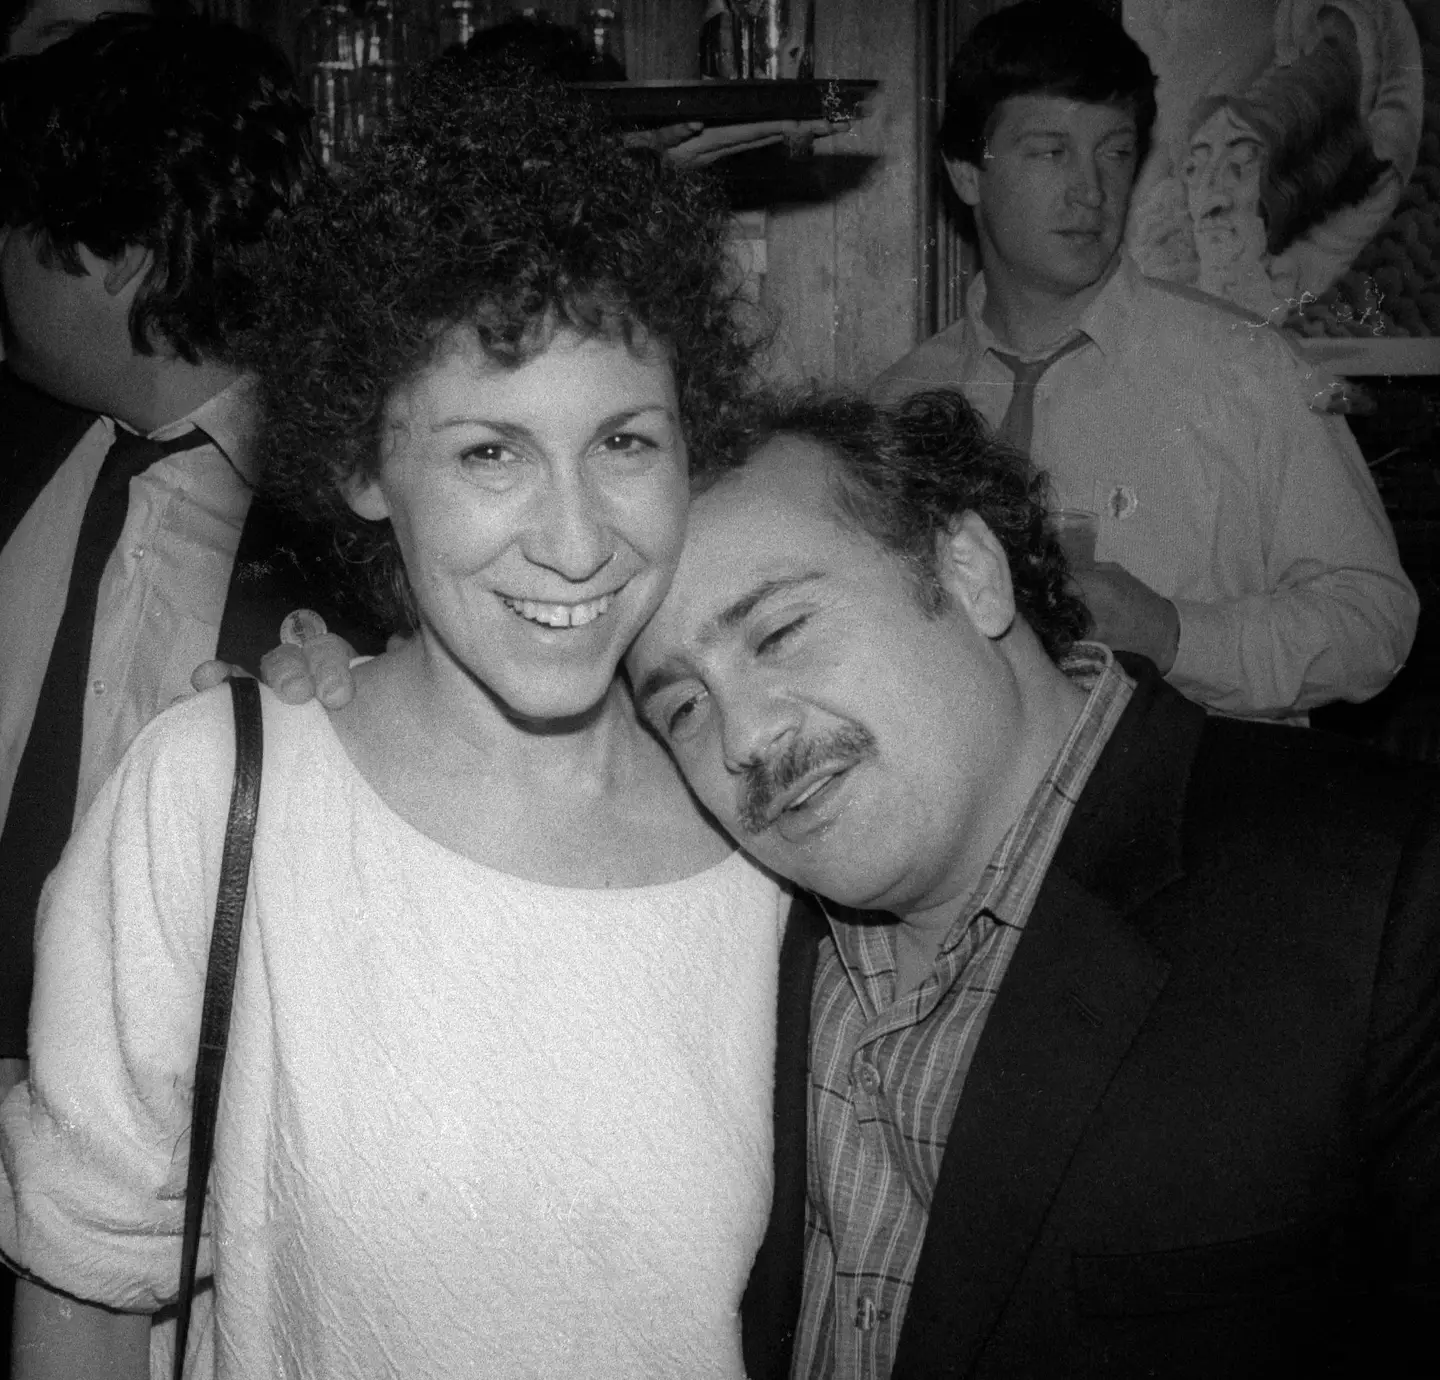 Rhea Perlman and Danny DeVito were married in 1982.